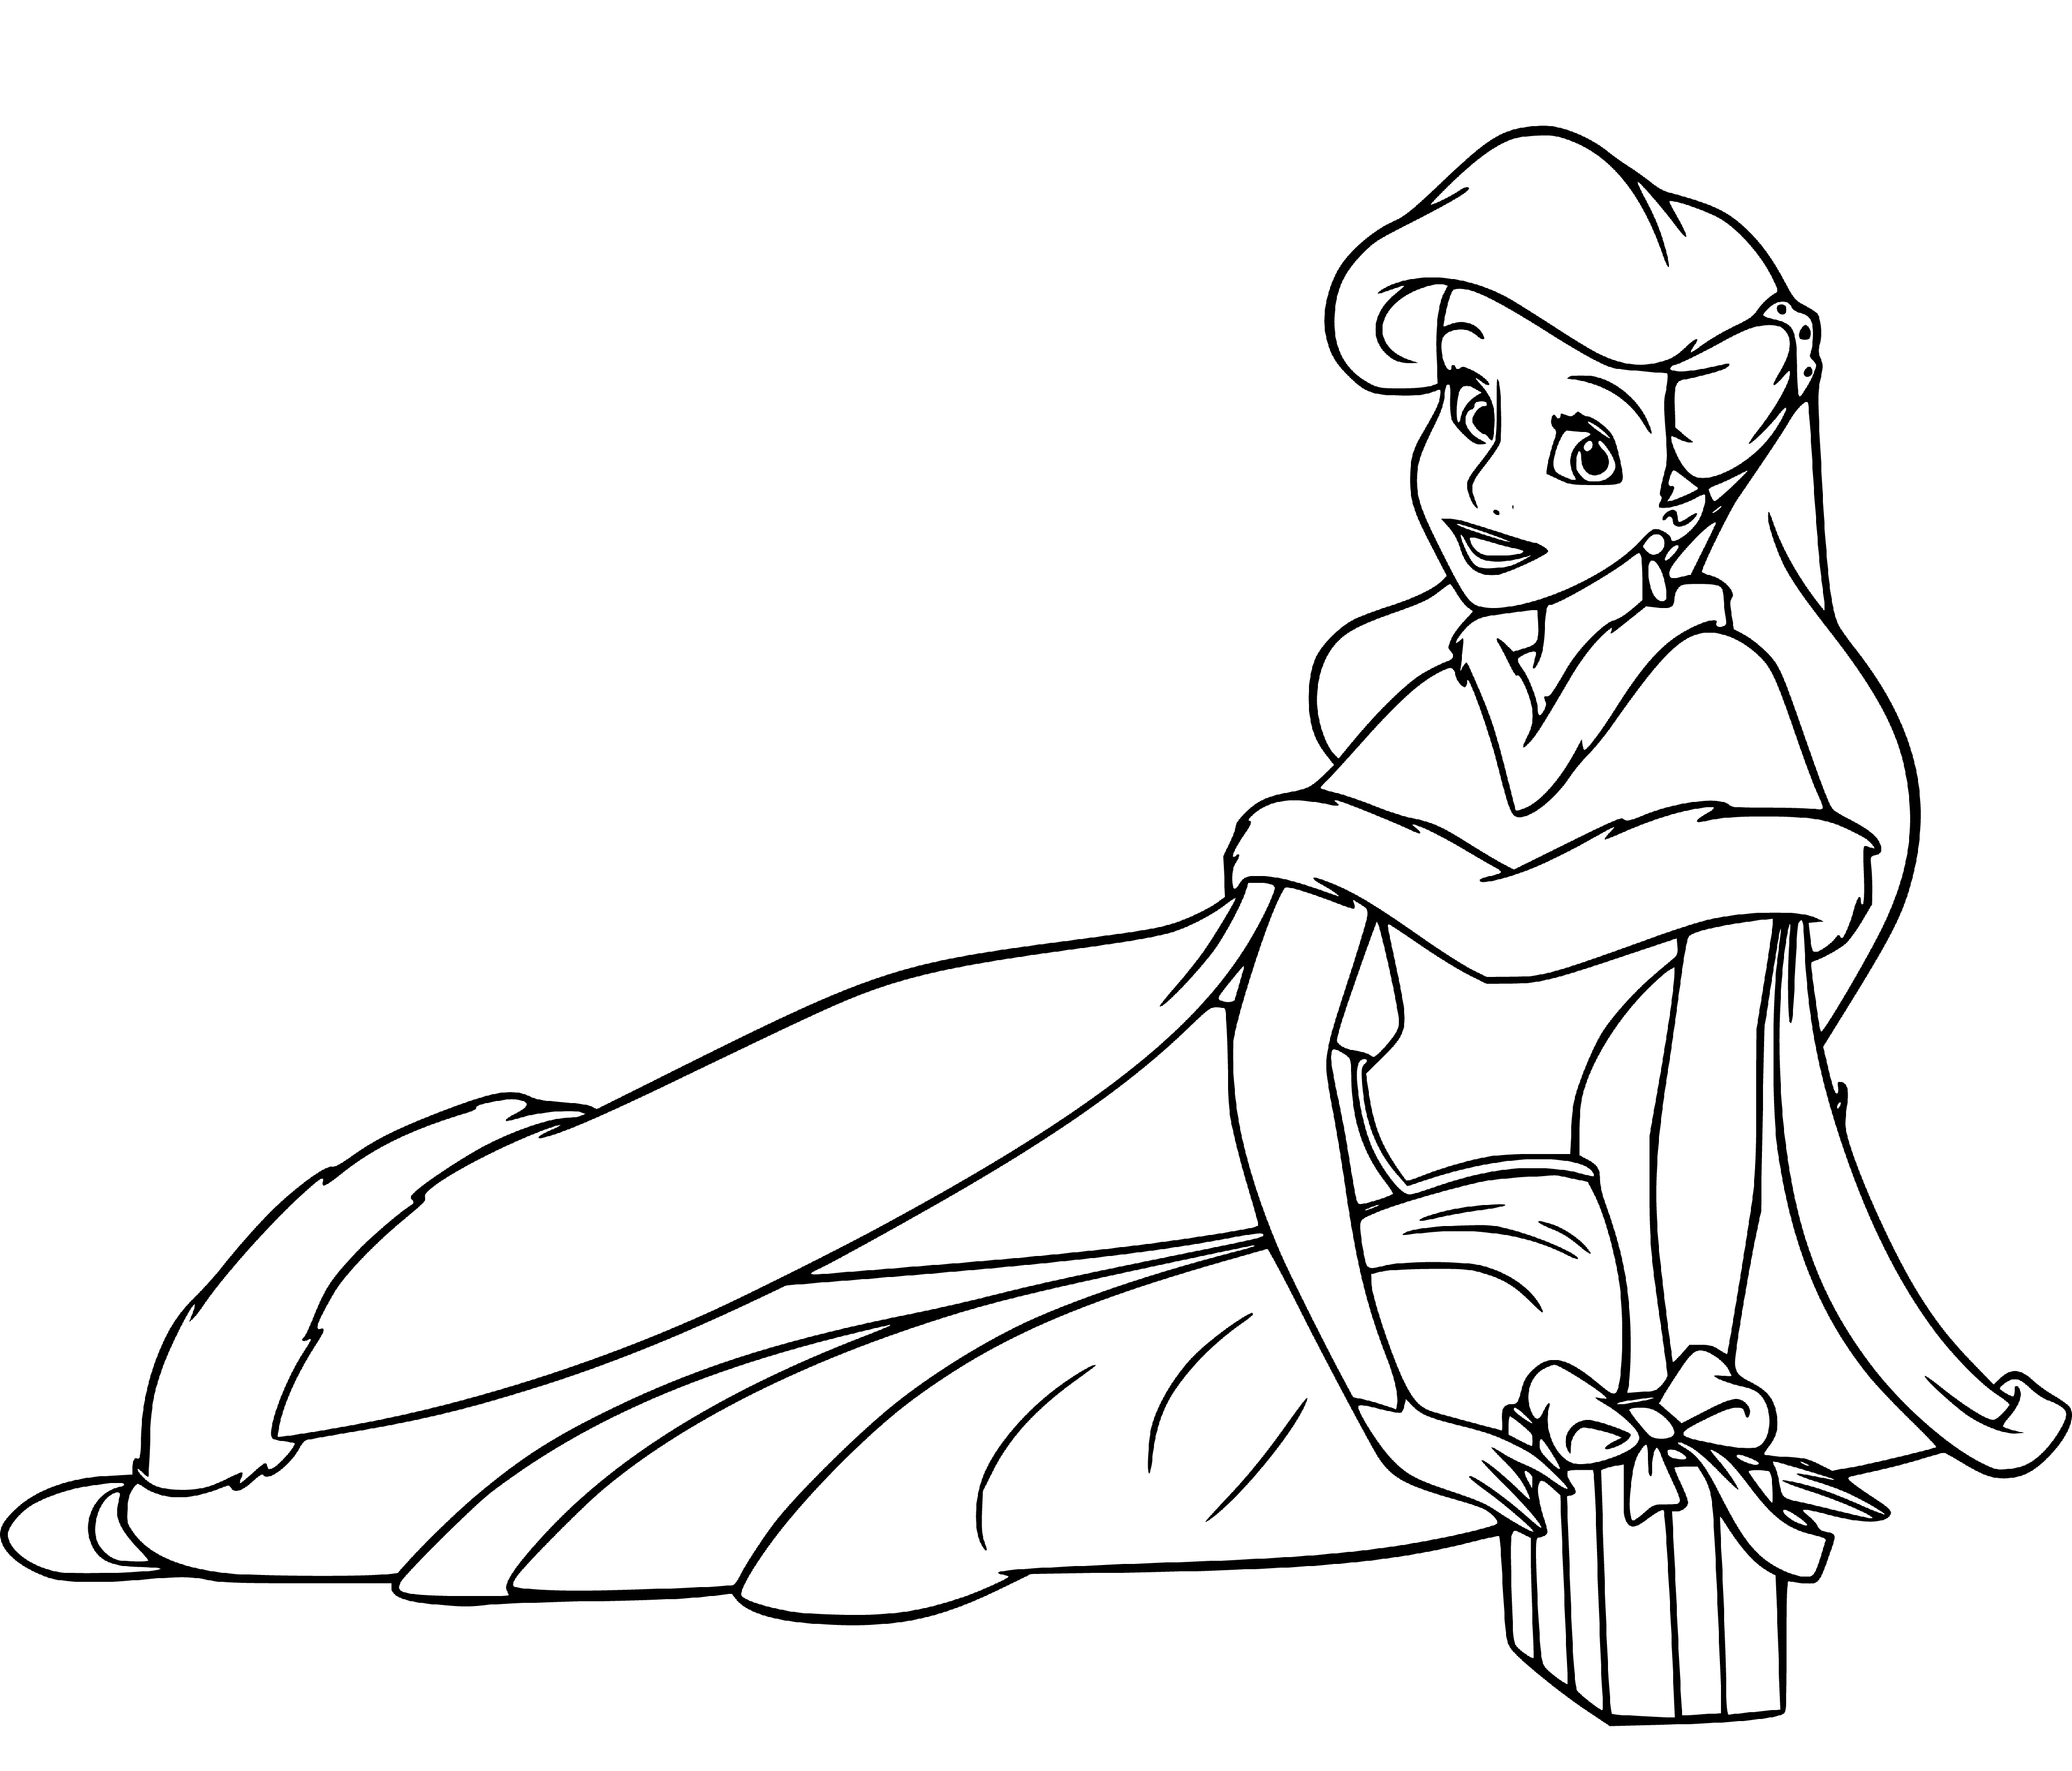 Princess Ariel as Human and a Gift Coloring Sheet - SheetalColor.com